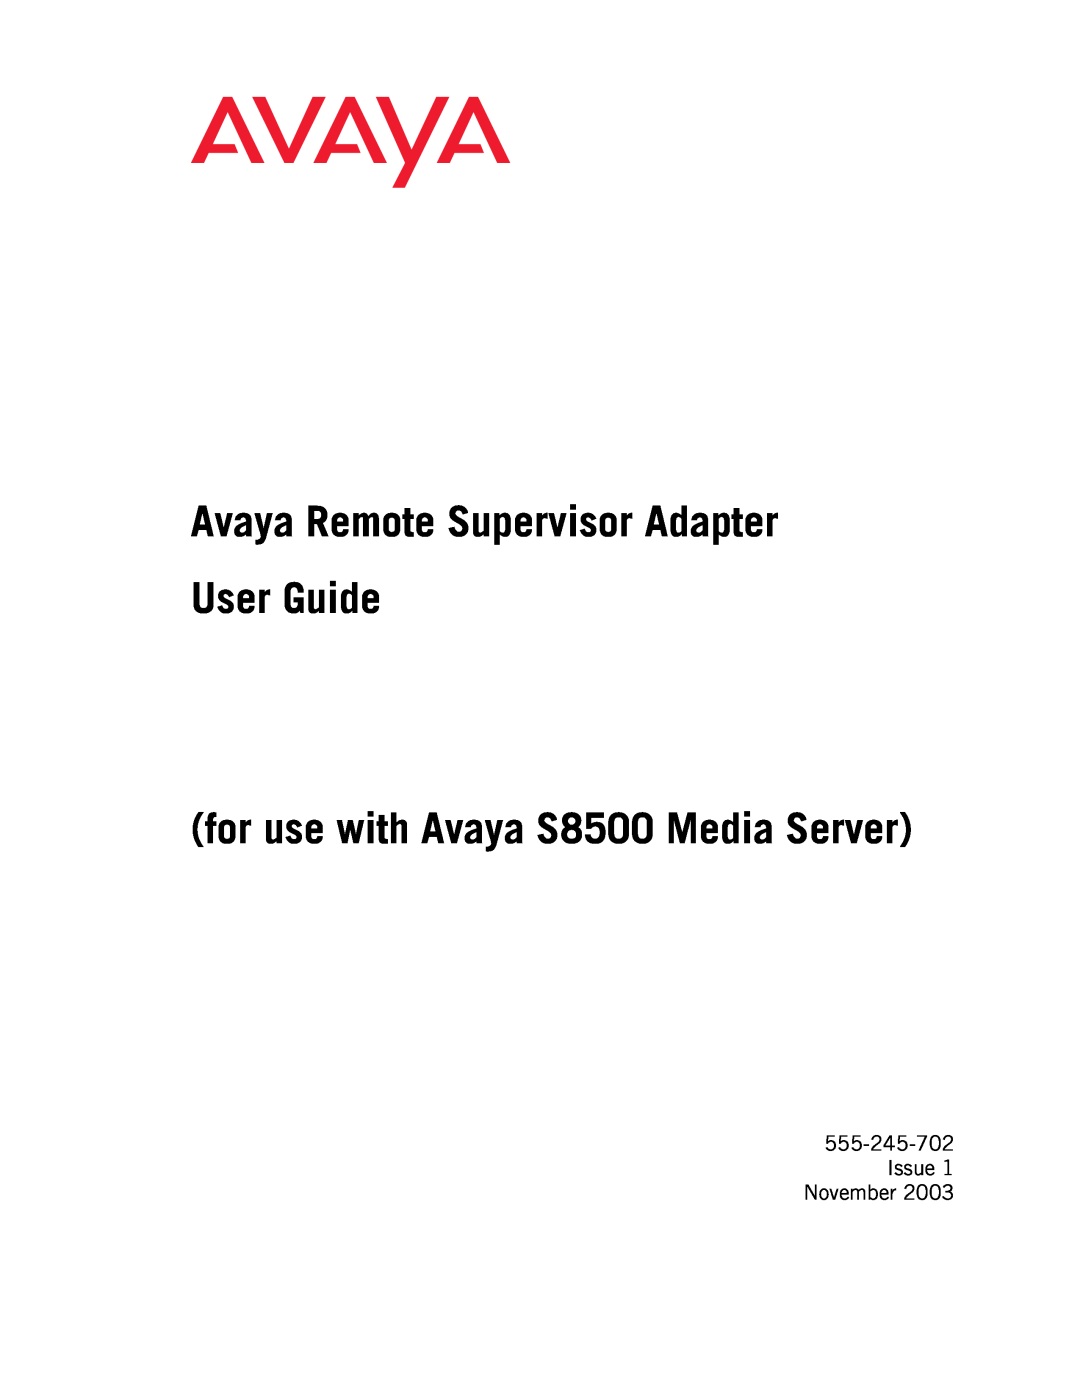 Avaya manual Avaya Remote Supervisor Adapter User Guide, for use with Avaya S8500 Media Server, Issue 1 November 